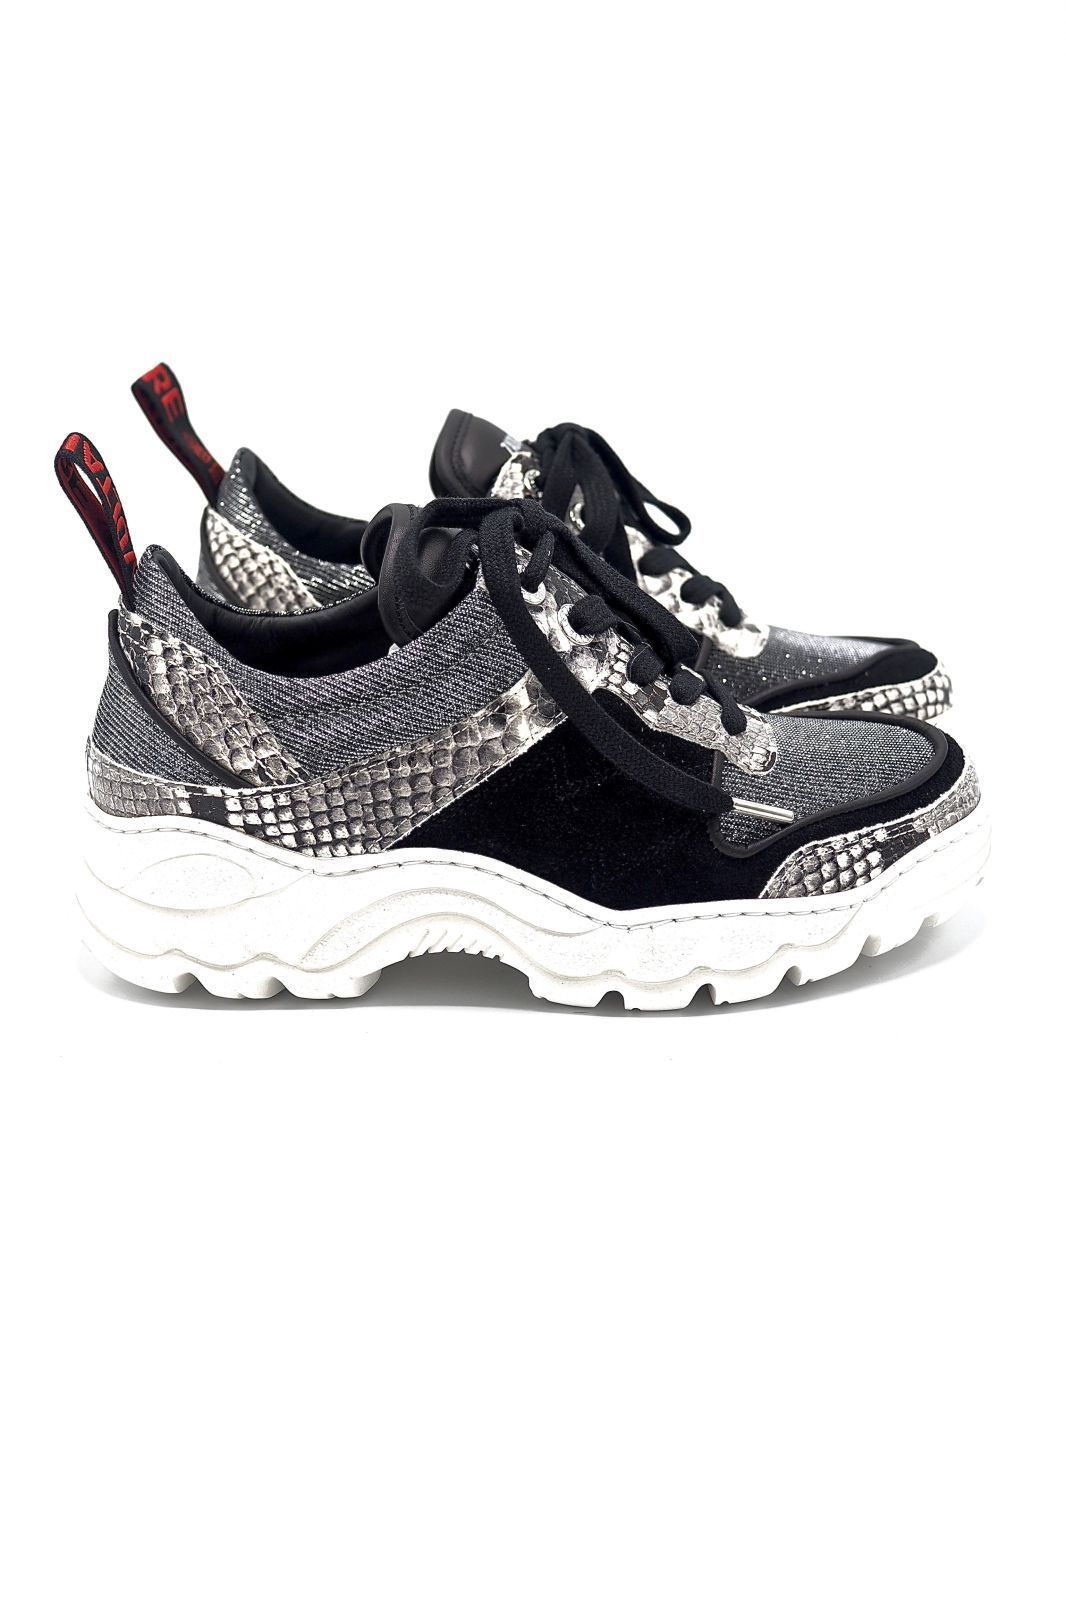 Zadig & Voltaire Accessoires basket bas Noir femmes (Z&V acc-Sneakers sem. technic - BLAZE cuir/pyton black&silver) - Marine | Much more than shoes